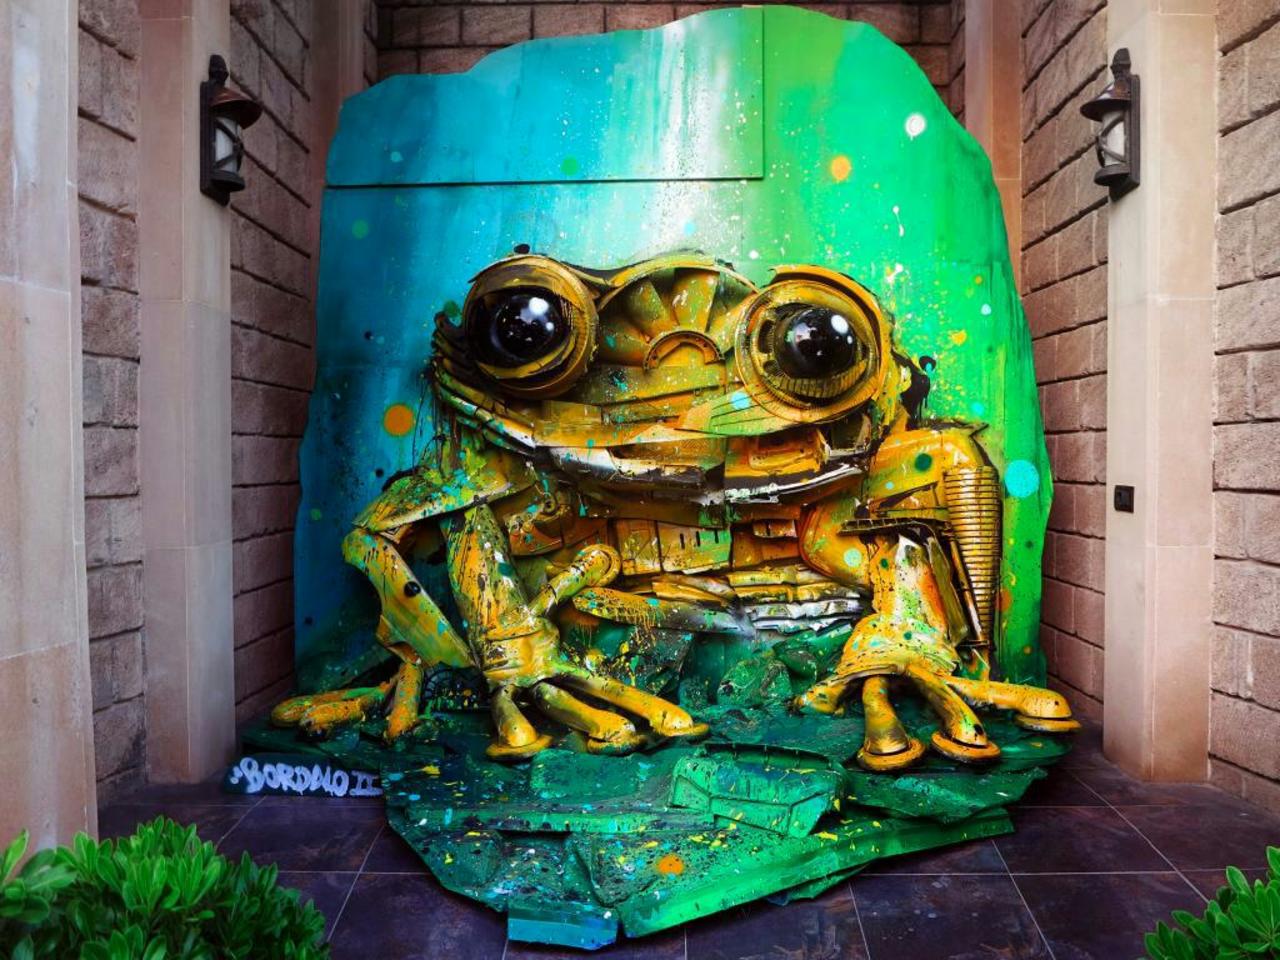 RT @QueGraffiti: "Yellow Frog", una nueva pieza del artista Bordalo II en Baku, Azerbaiyán #streetart #mural #graffiti #art http://t.co/RikHsTnVa0